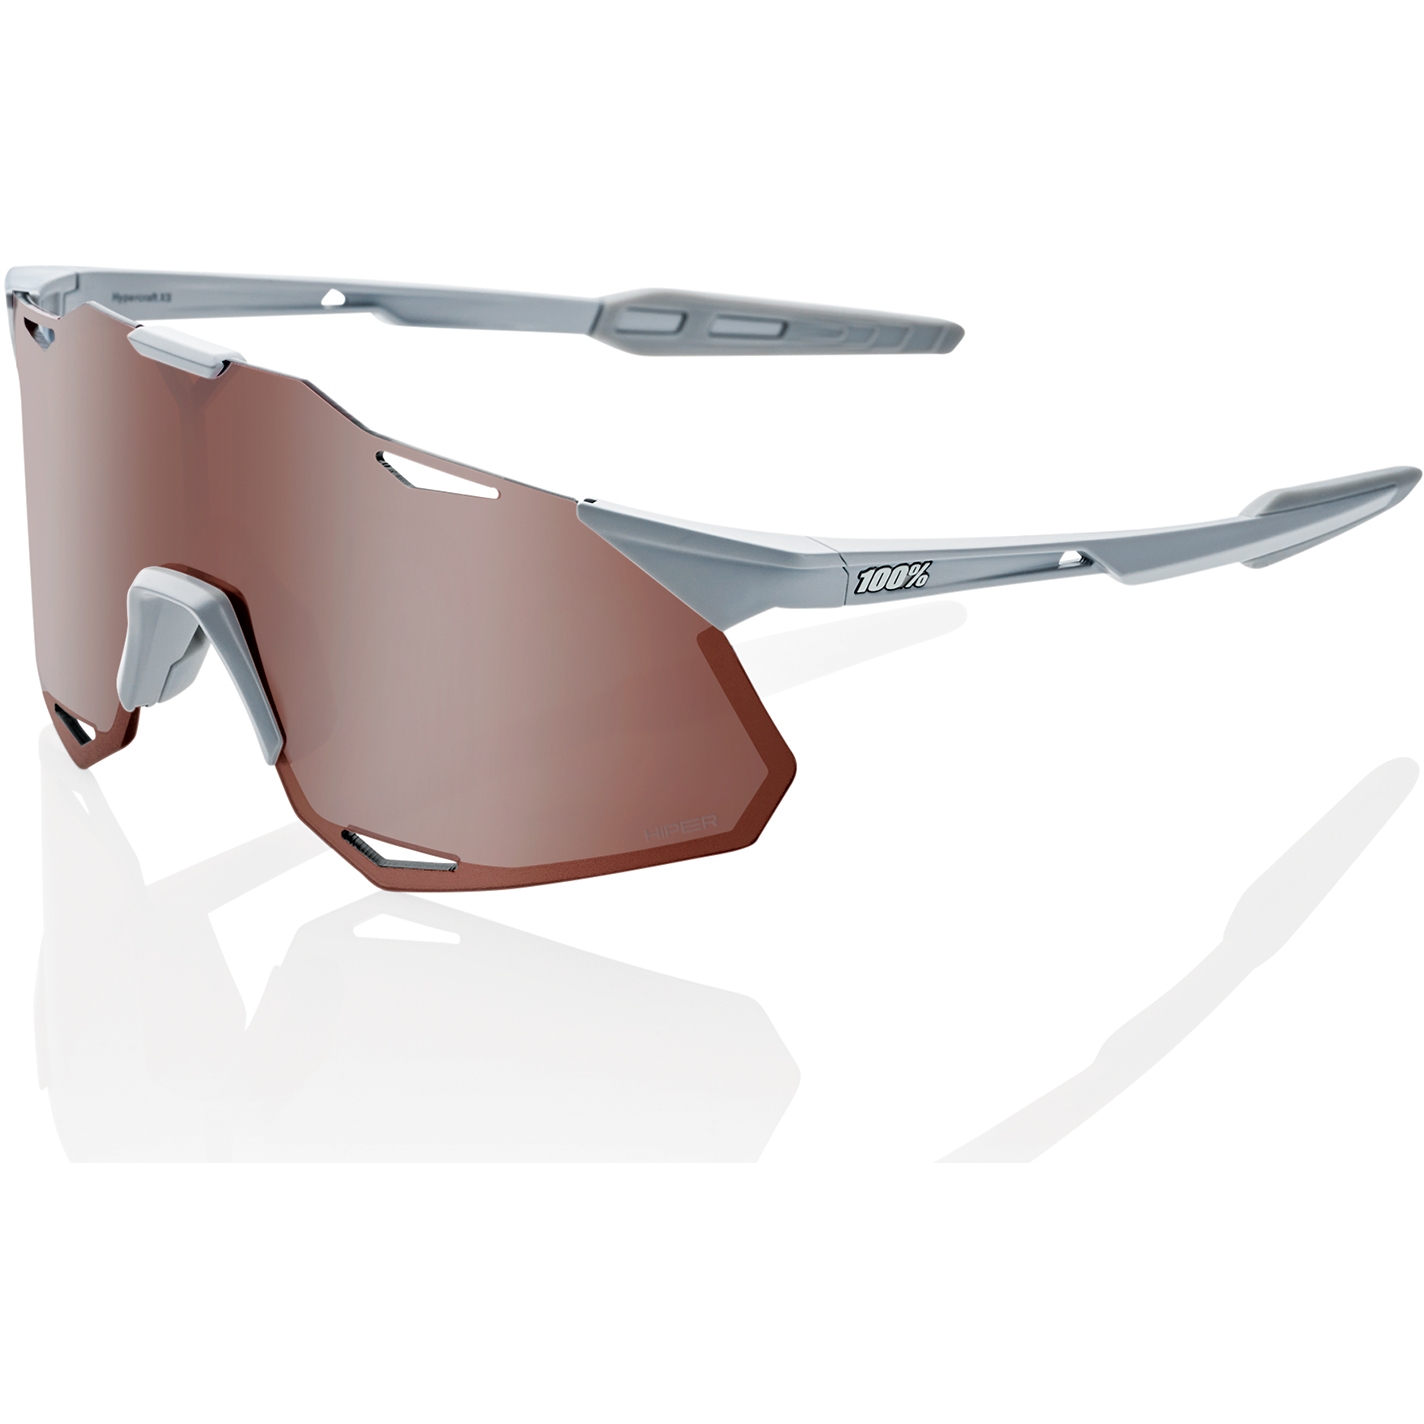 Productfoto van 100% Hypercraft XS Glasses - HiPER Mirror Lens - Matte Stone Grey / Crimson Silver + Clear